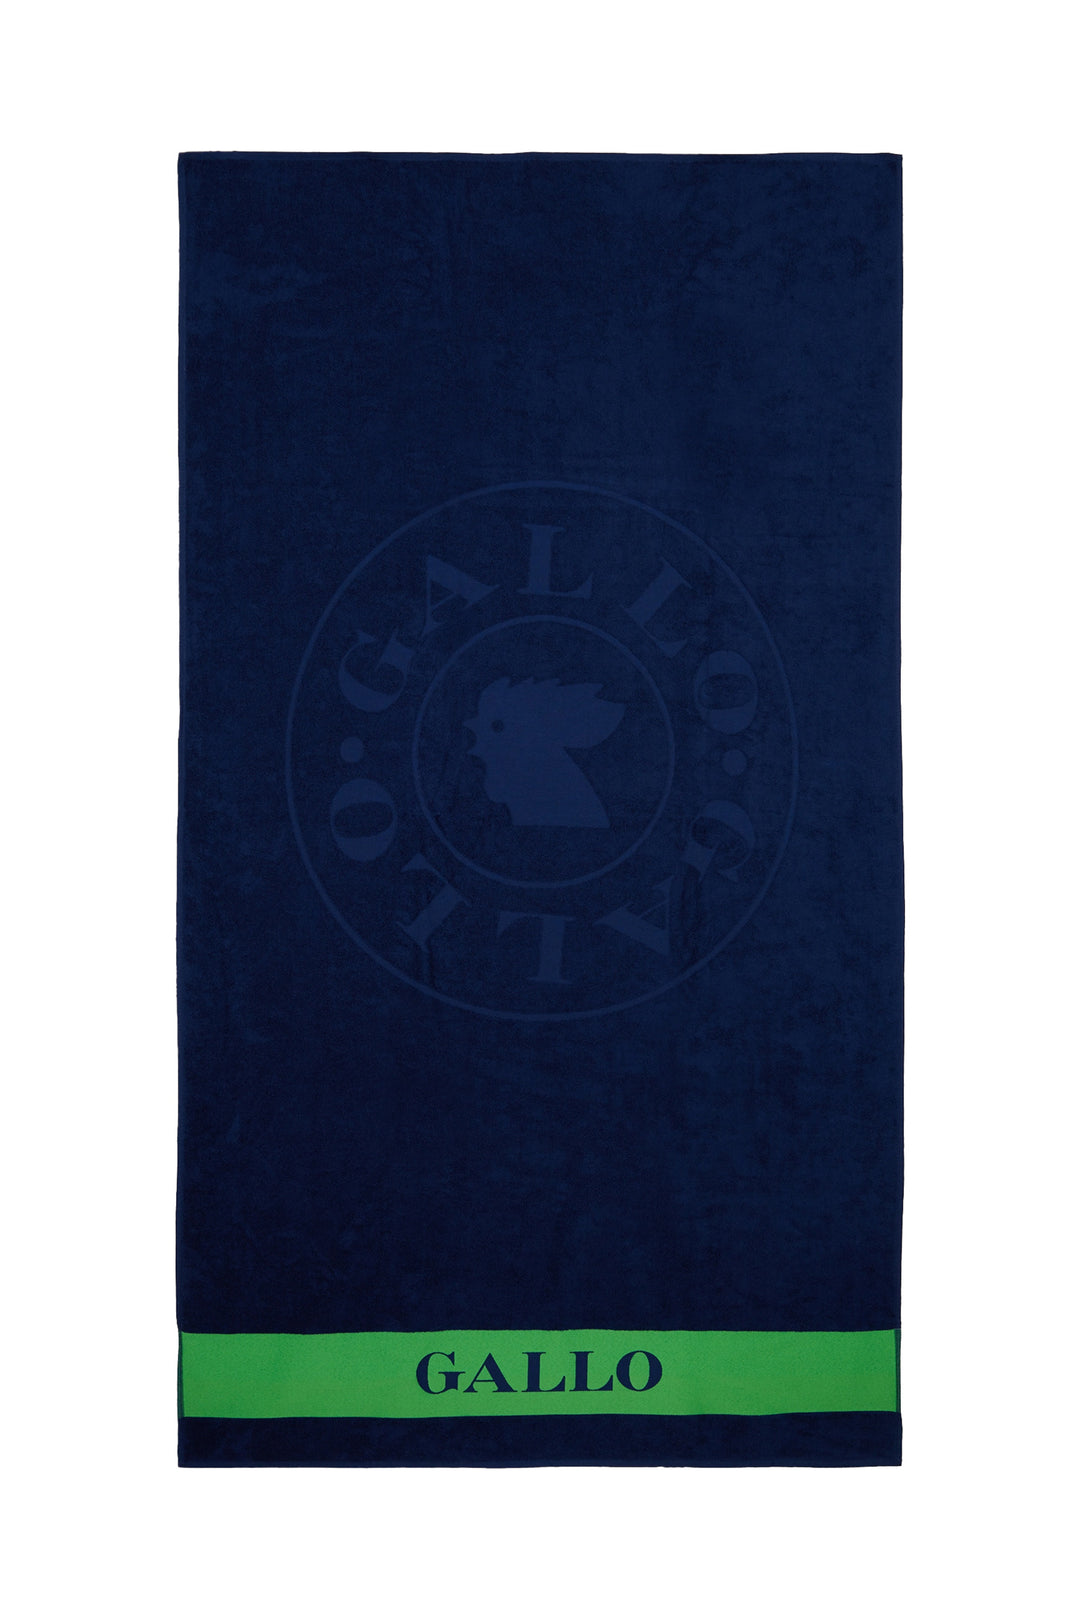 GALLO Telo mare unisex cotone blu royal tinta unita con logo gallo - Mancinelli 1954